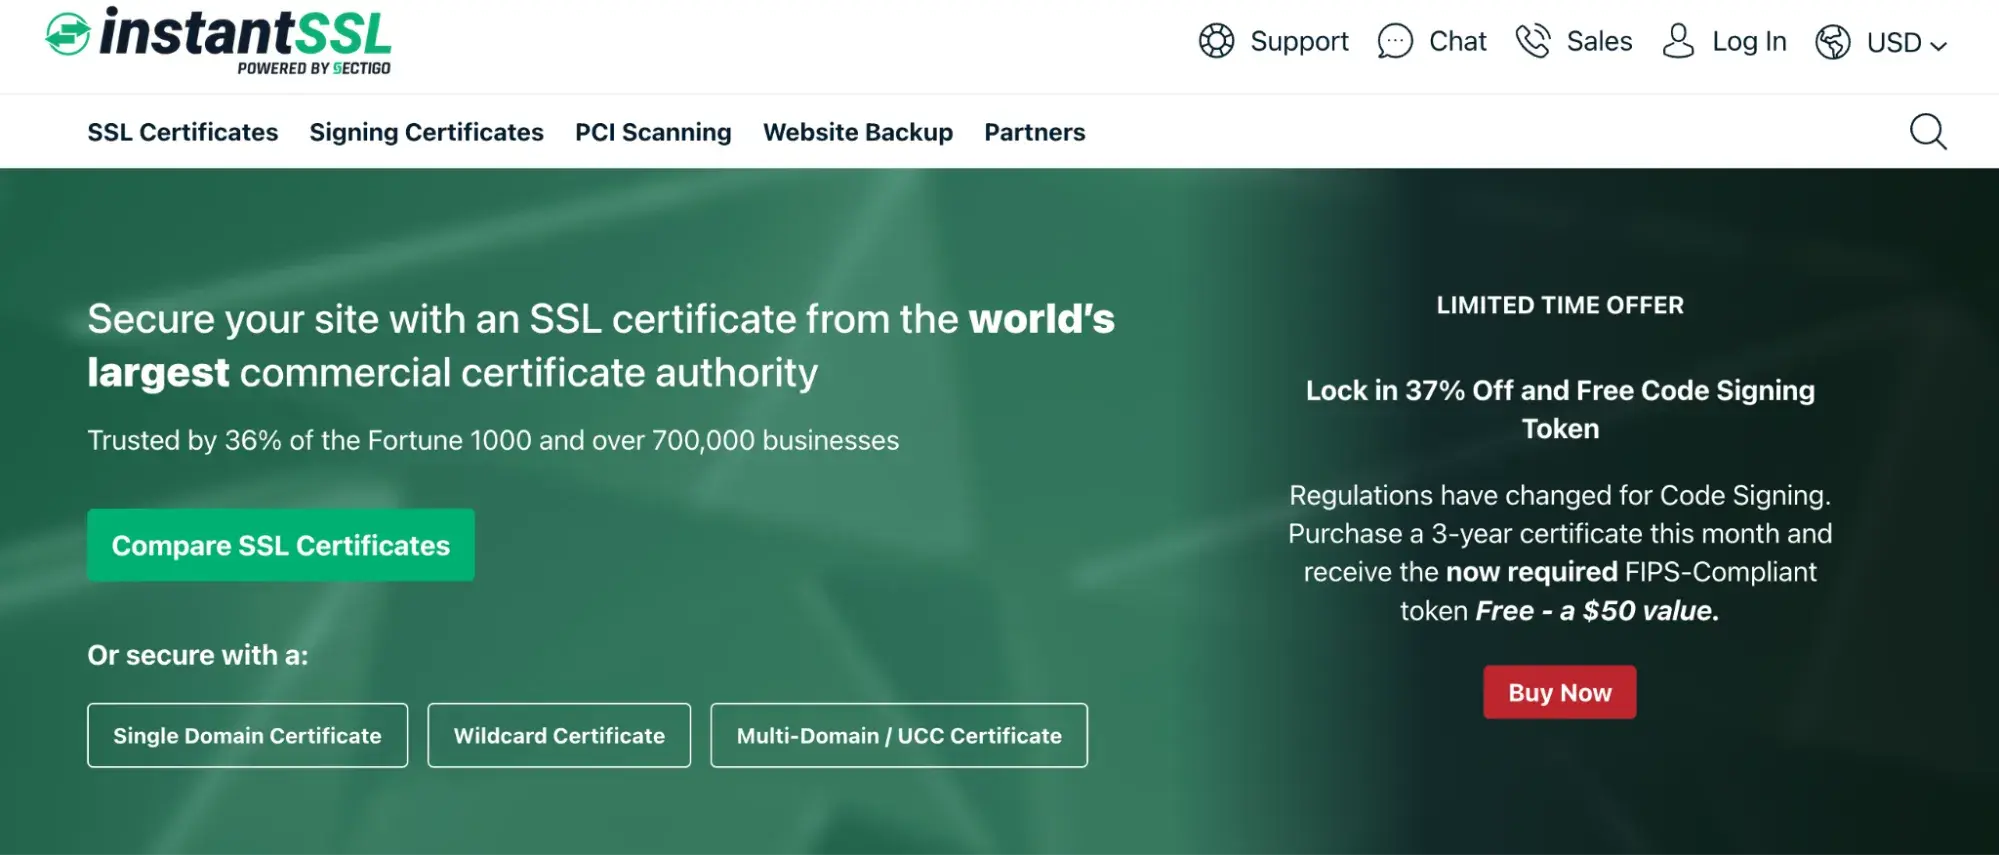 ssl certificate provider, gogetssl